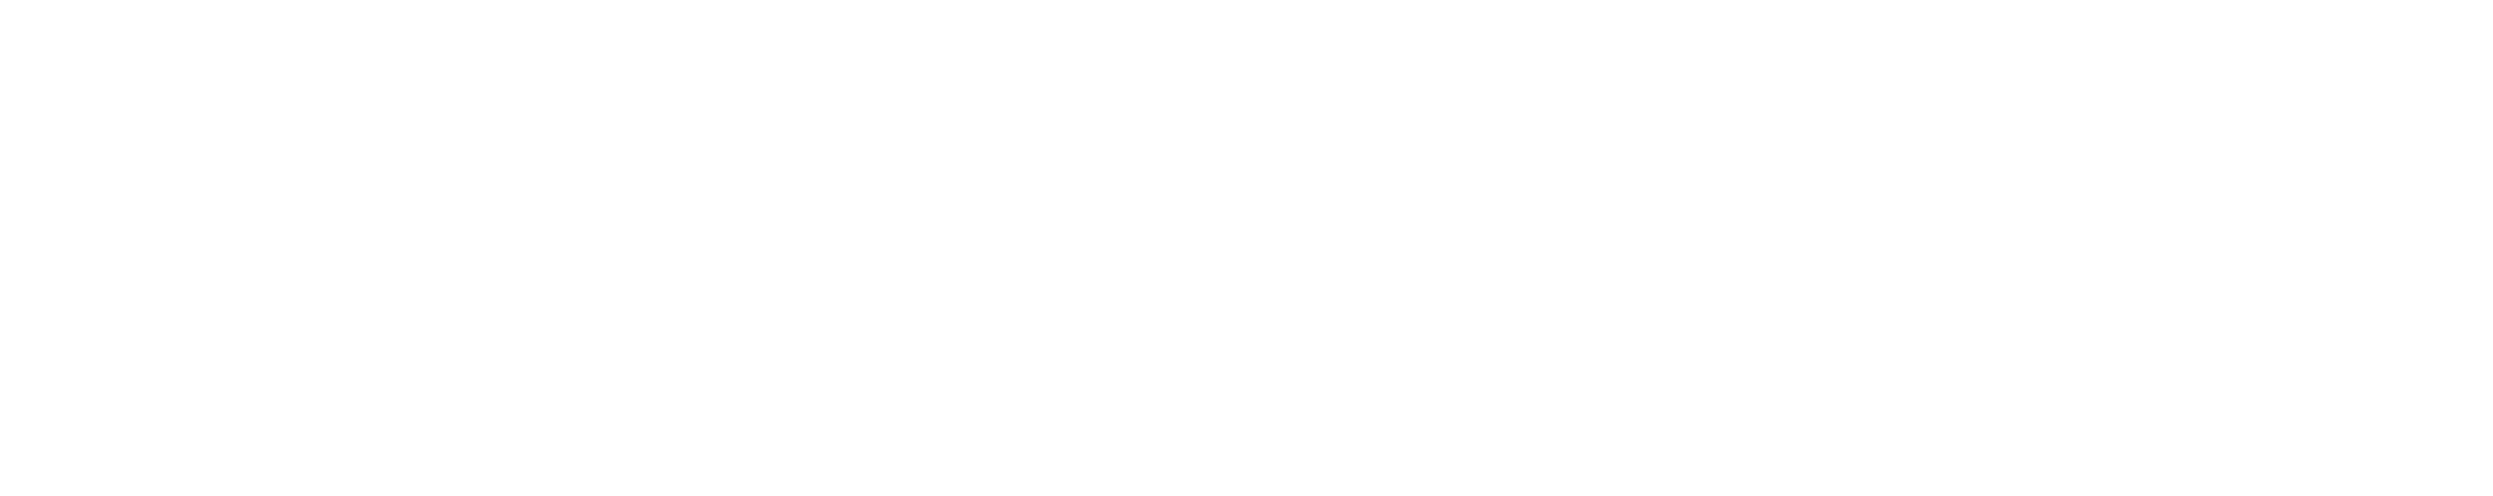 Live Stories logo